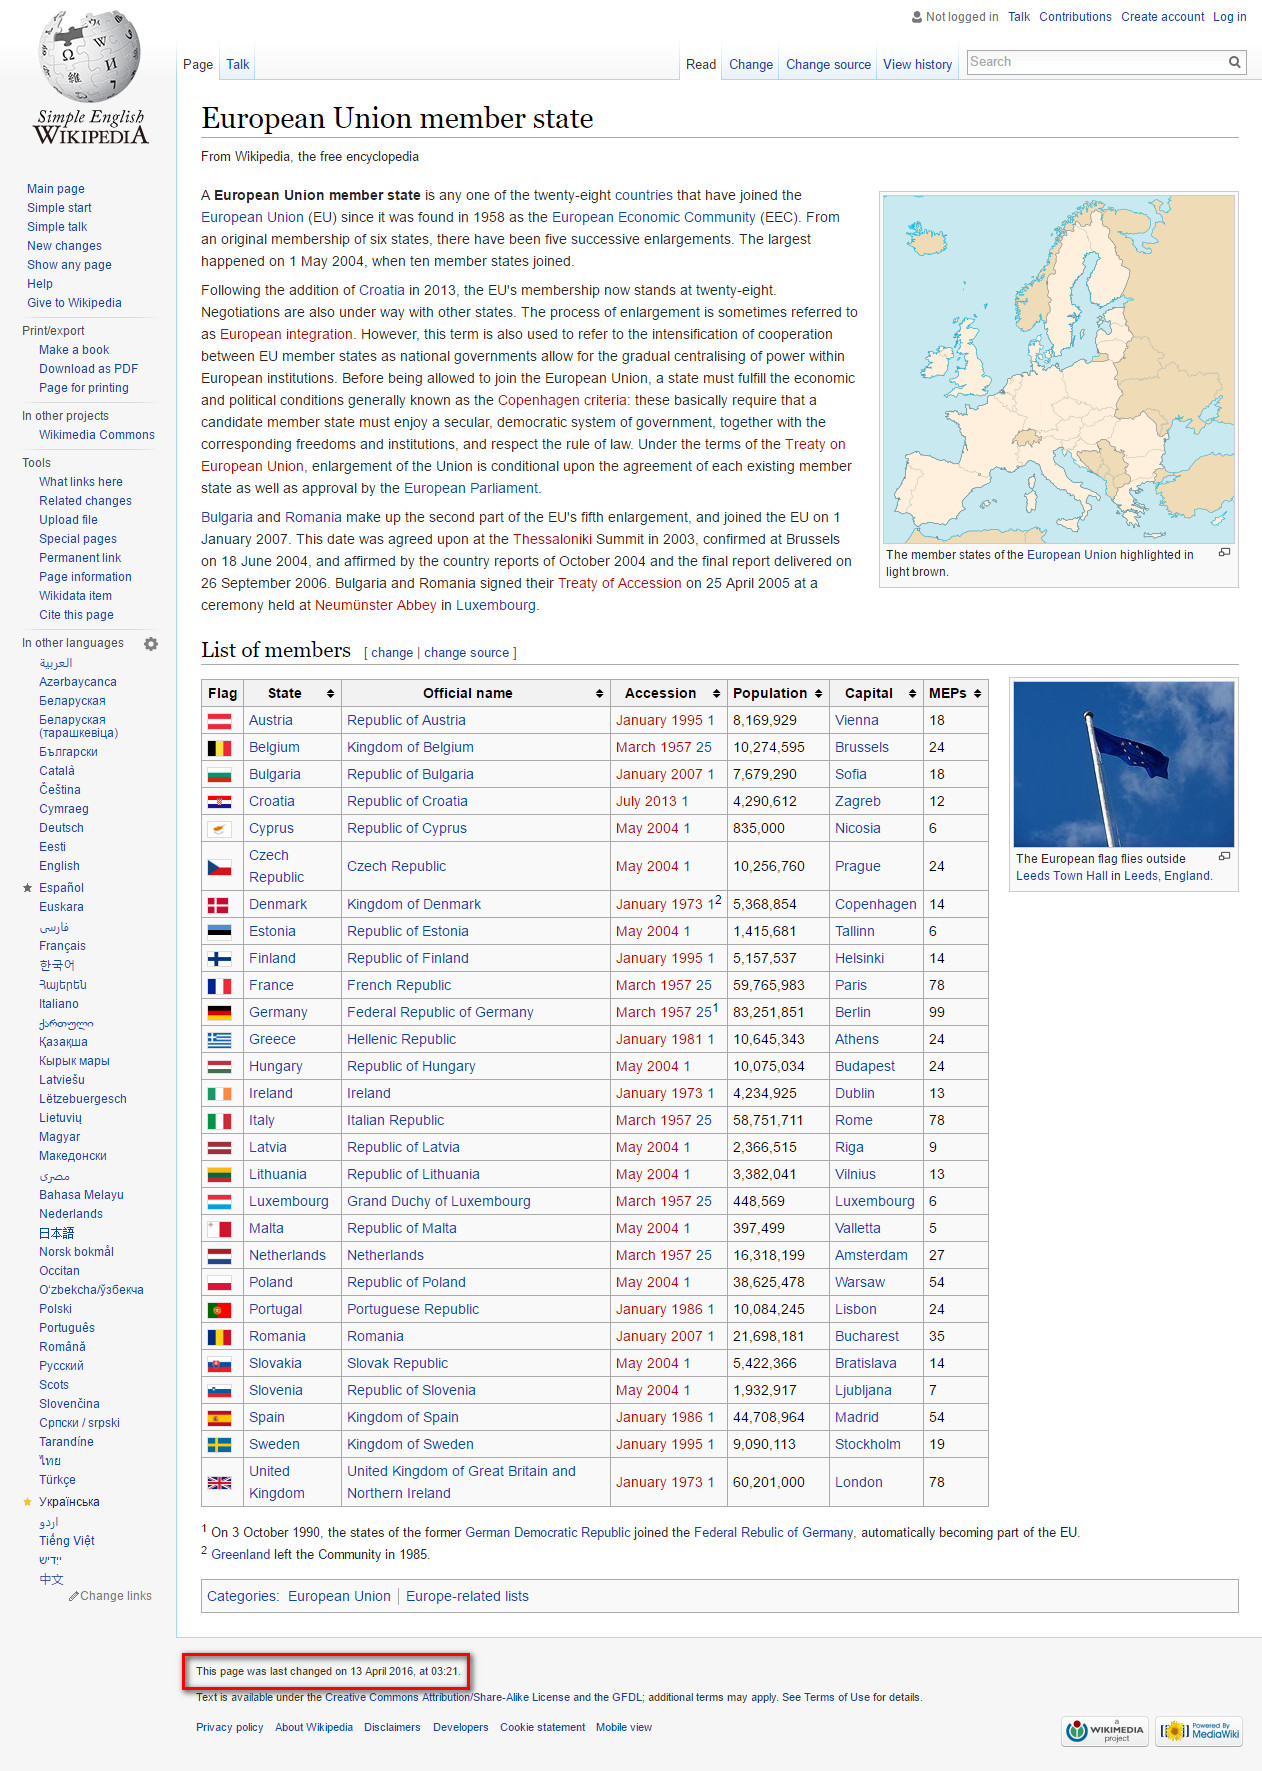 https://simple.wikipedia.org/wiki/European_Union_member_state